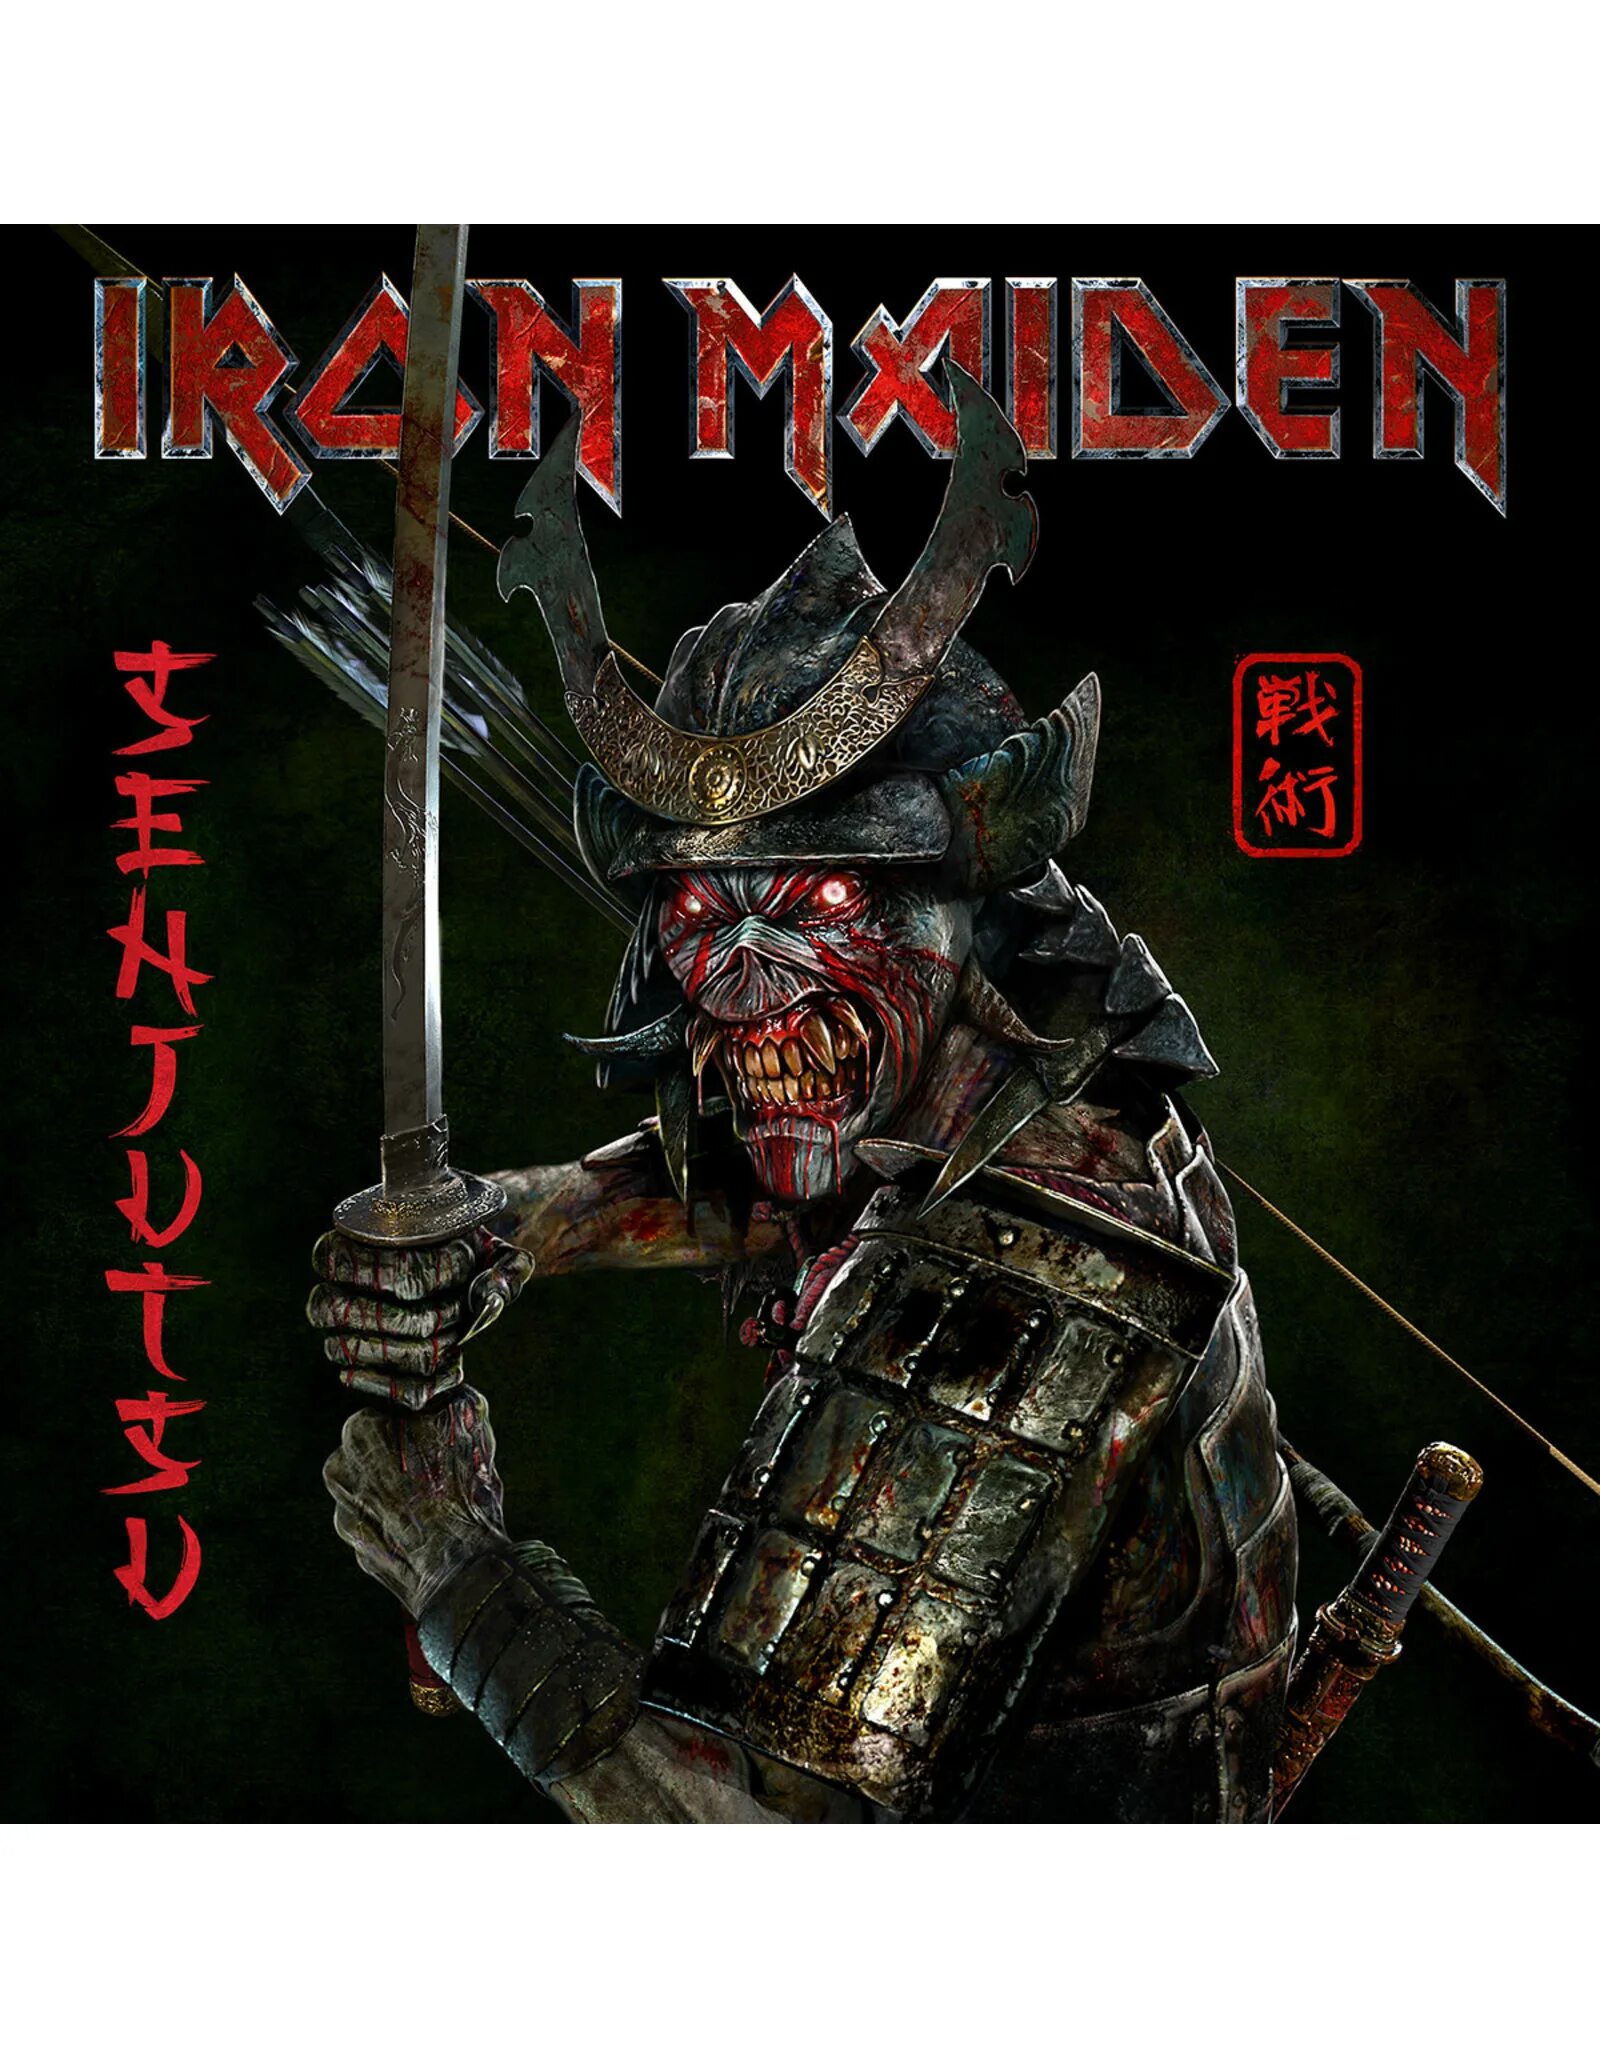 Senjutsu iron maiden. Iron Maiden "Senjutsu". Iron Maiden Senjutsu 2021. Iron Maiden Senjutsu 2021 обложка CD. Iron Maiden Stratego.